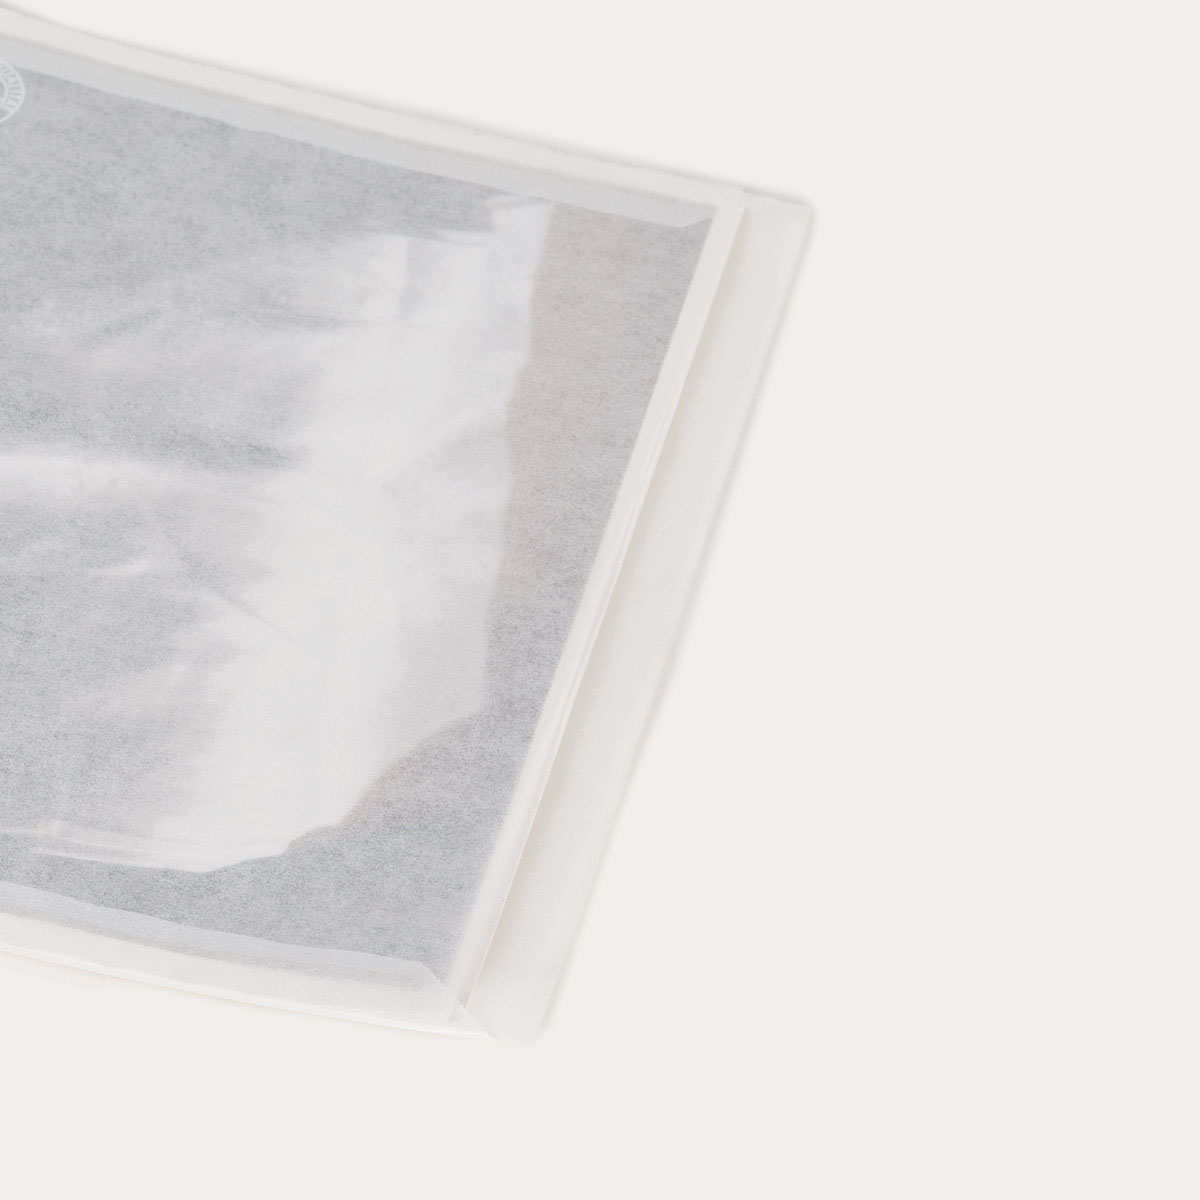 Envelope enclosure transp 13×18 cm